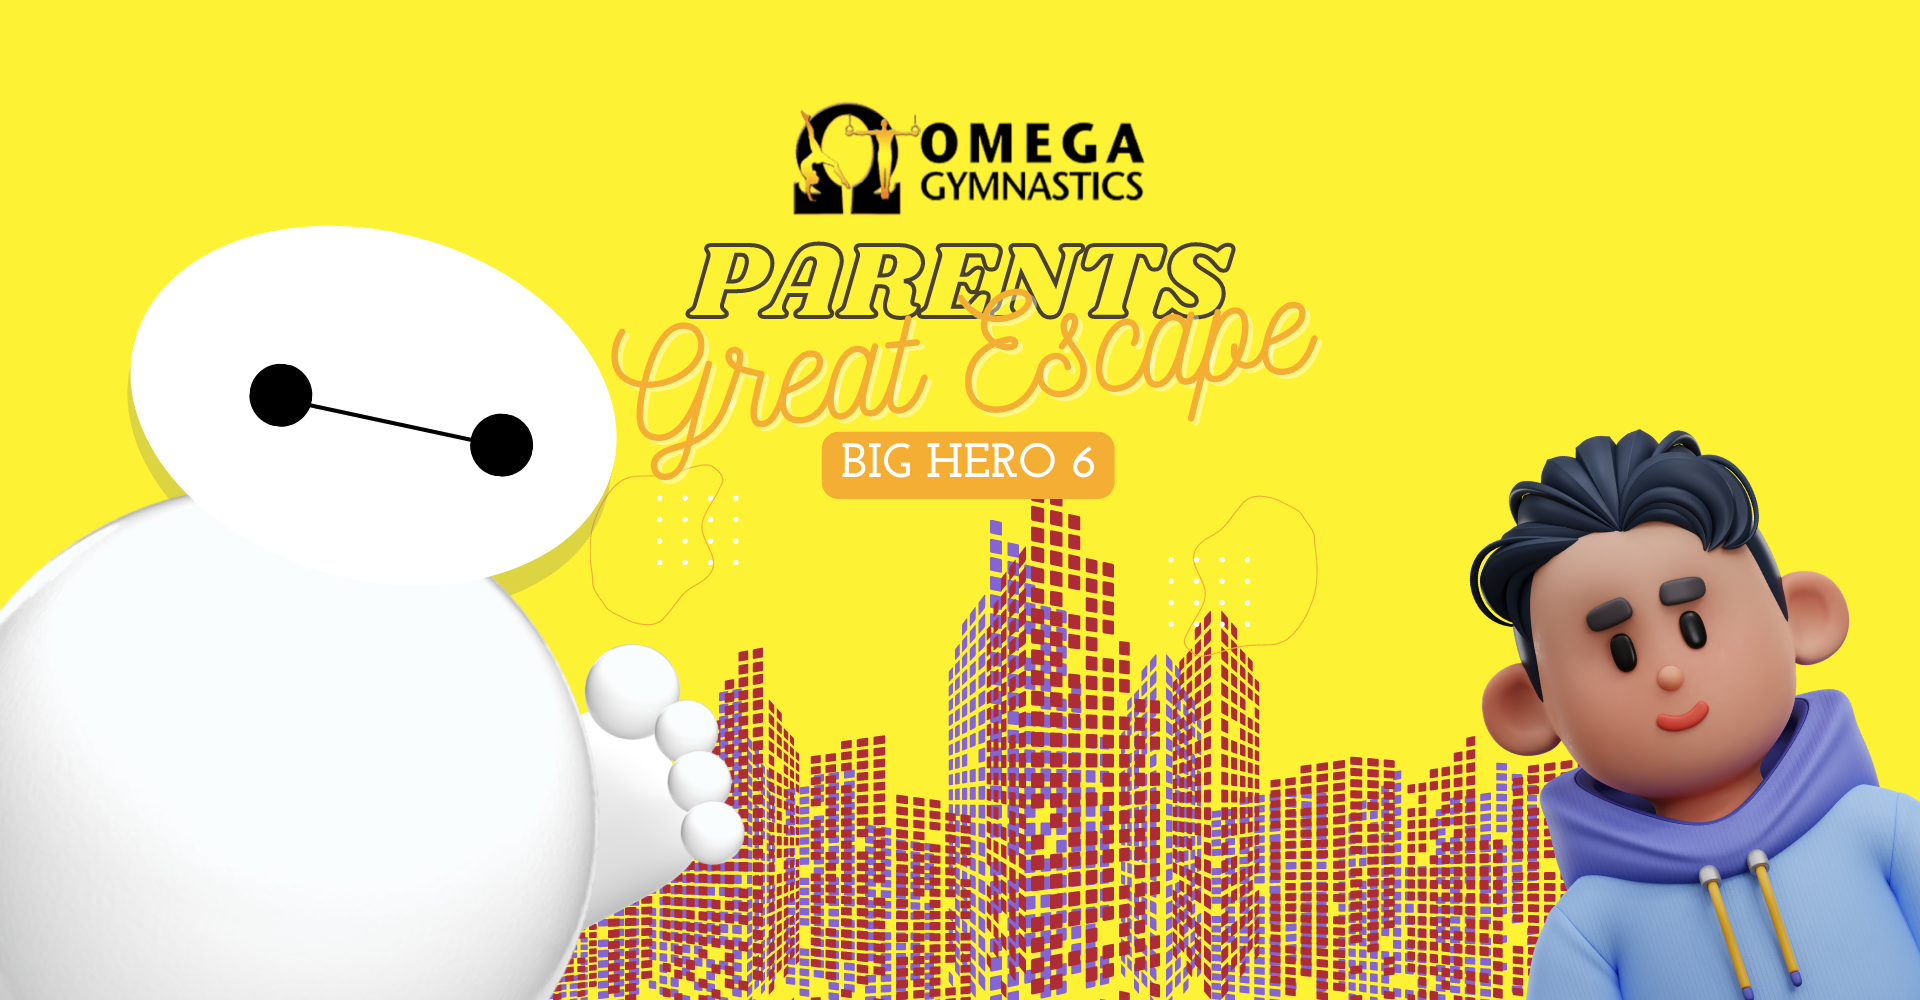 Parents Great Escape Movie – BIG HERO 6 Parent's Great Escape OMEGA Gymnastics